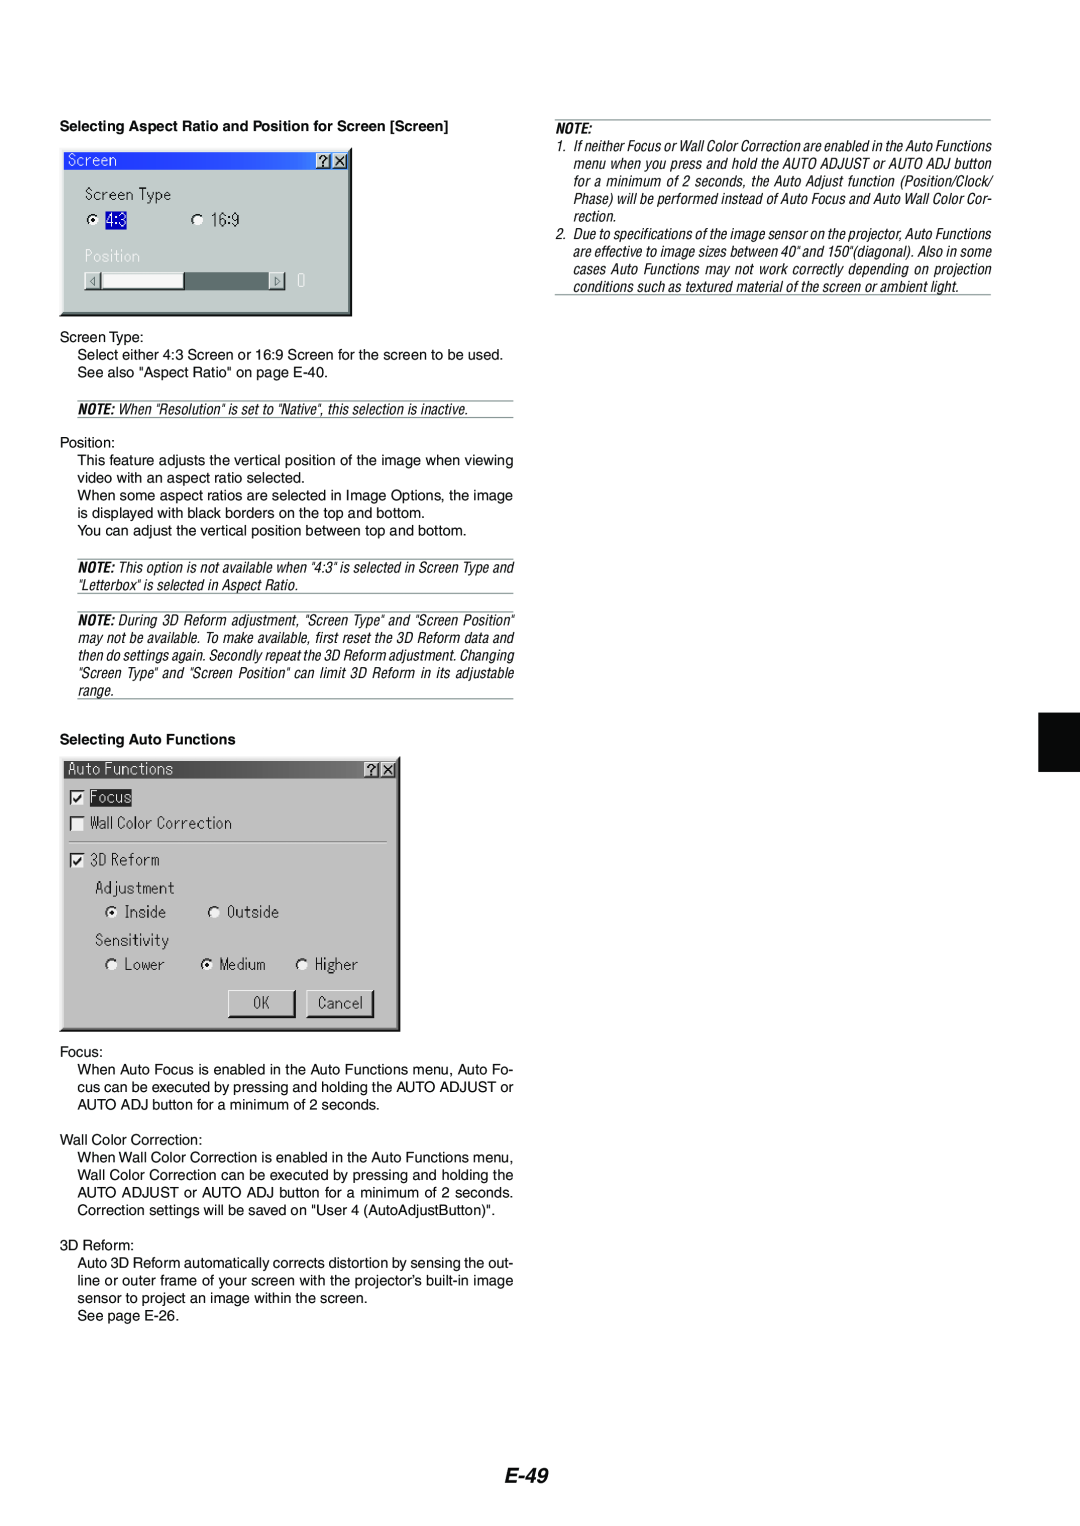 NEC MT1075/MT1065 user manual E-49, Selecting Auto Functions 